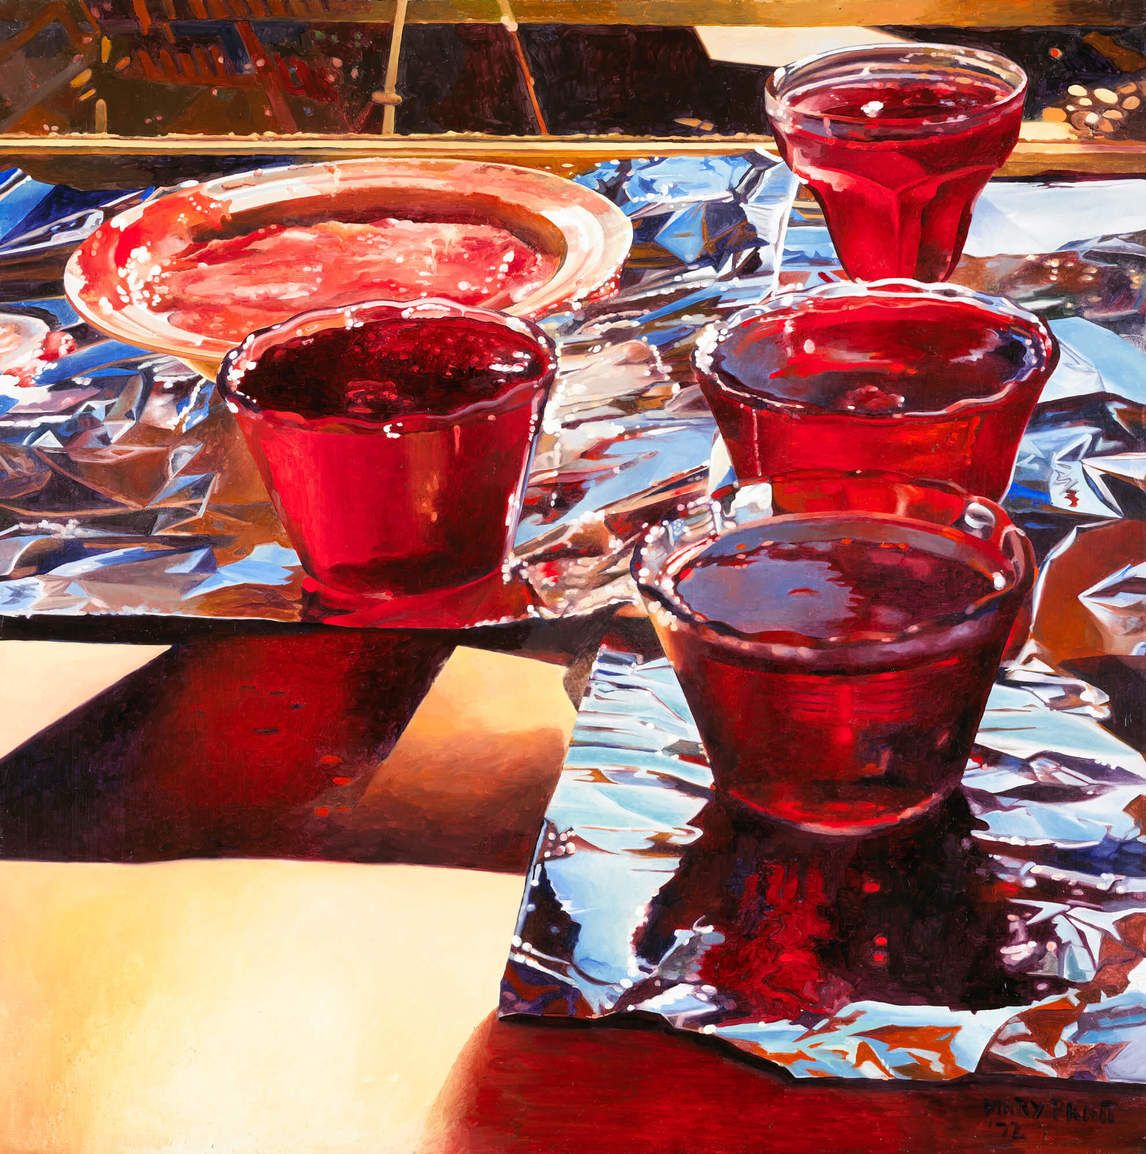 Red Currant Jelly (Gelée de groseilles), 1972